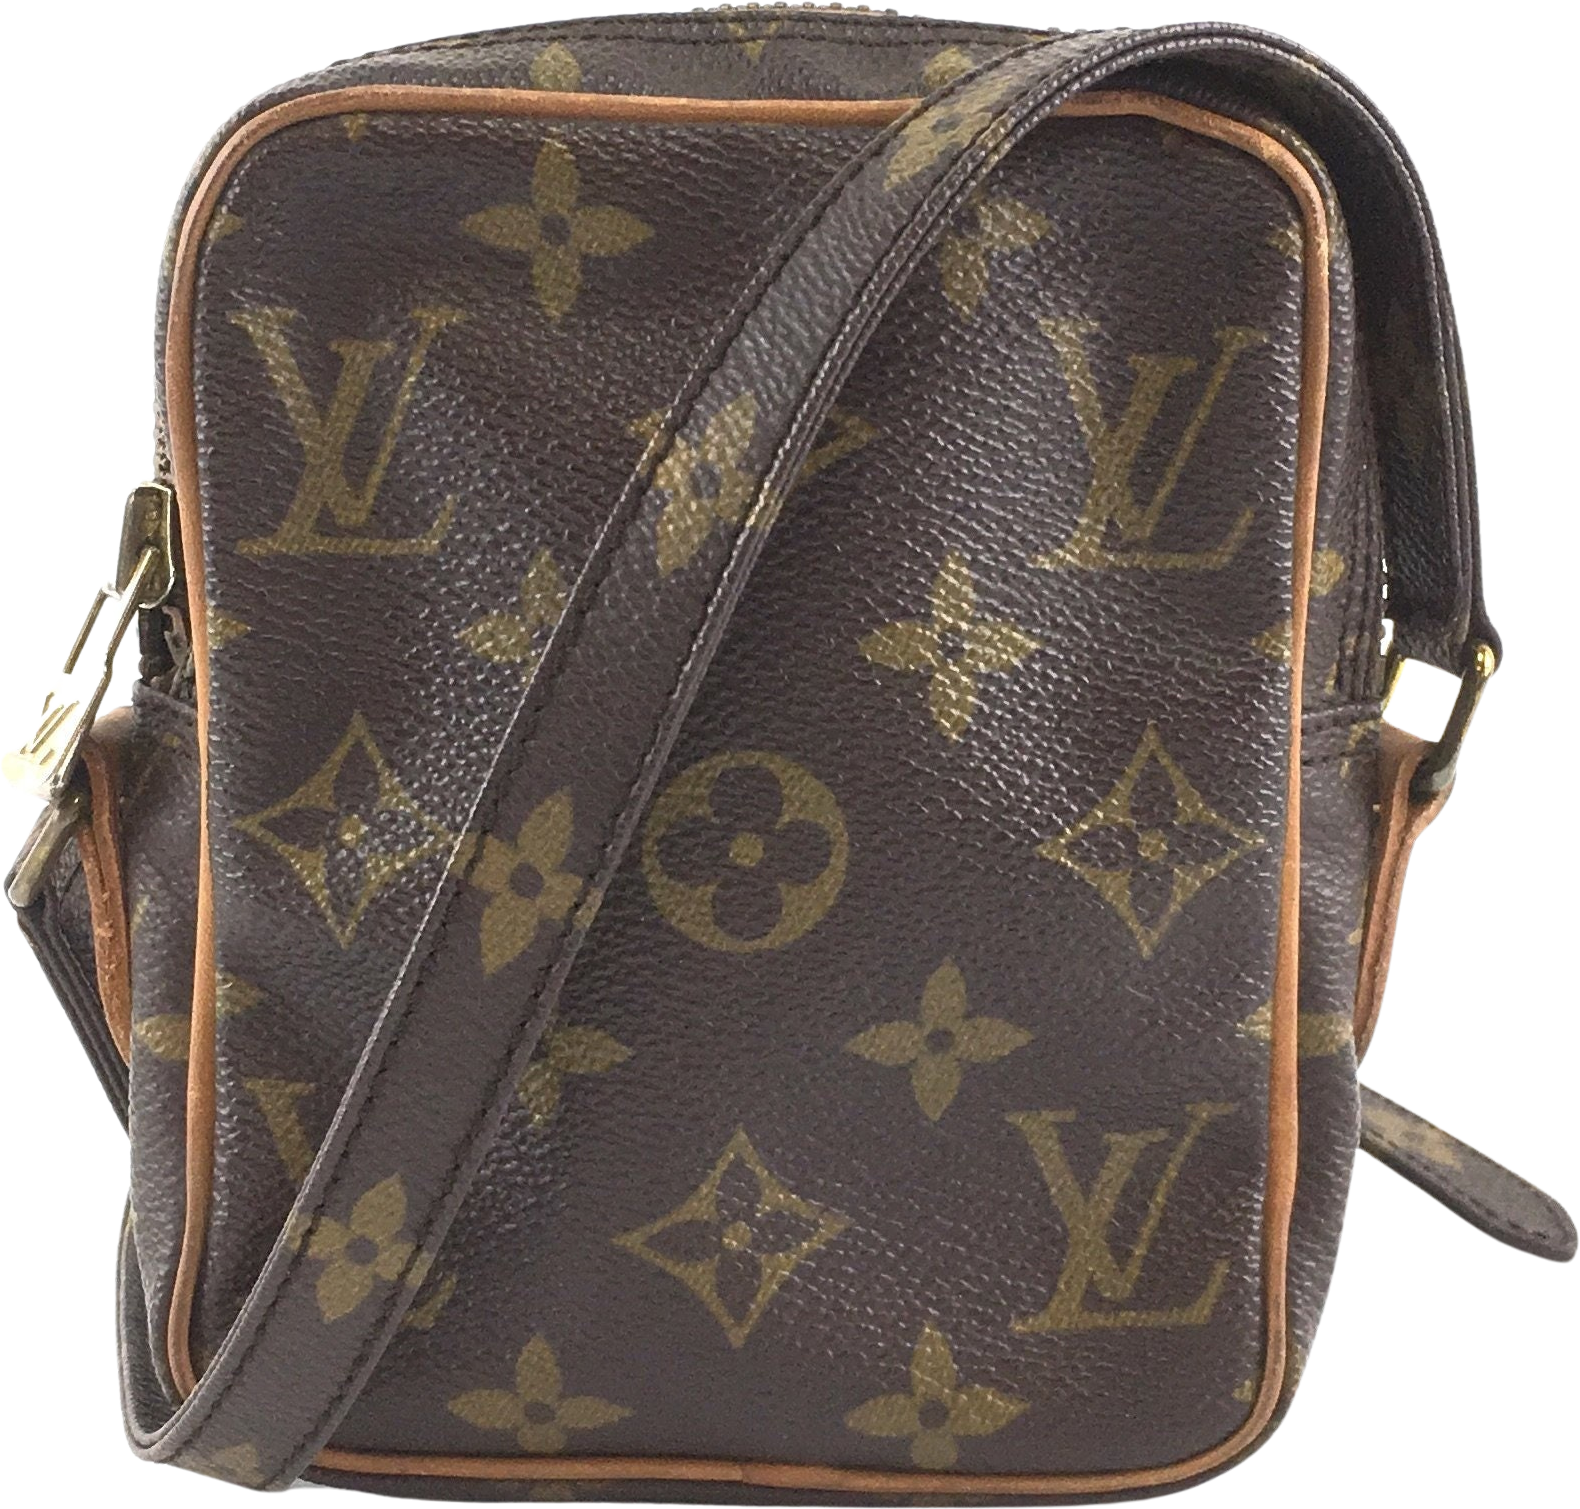 Danube Louis Vuitton Vintage Monogram Mini Bag Authentic 